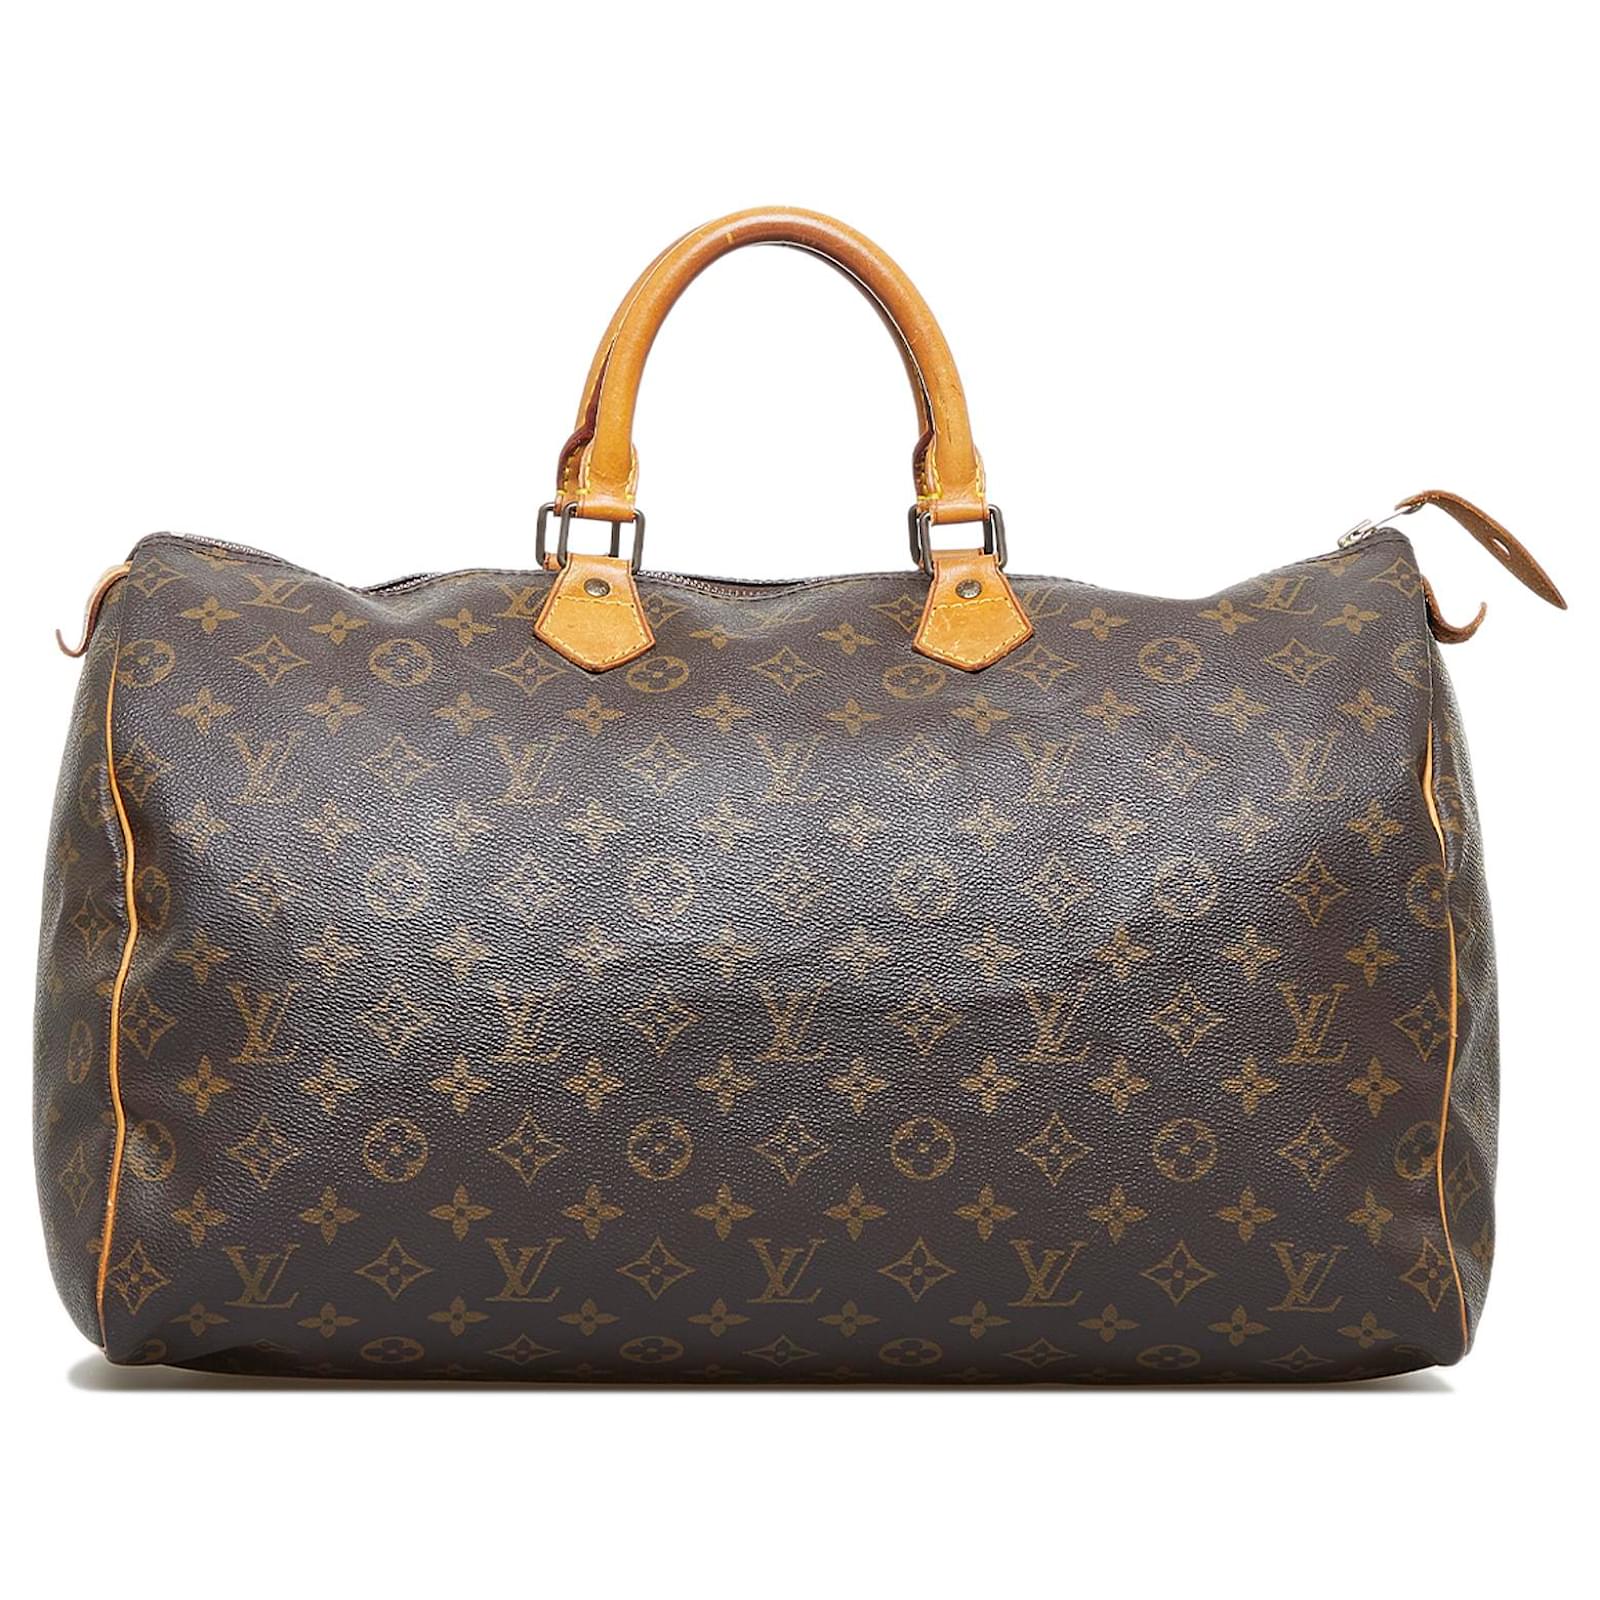 Authentic Louis Vuitton Damier Ebene Speedy 30 Top Handle Satchel Handbag  N41364